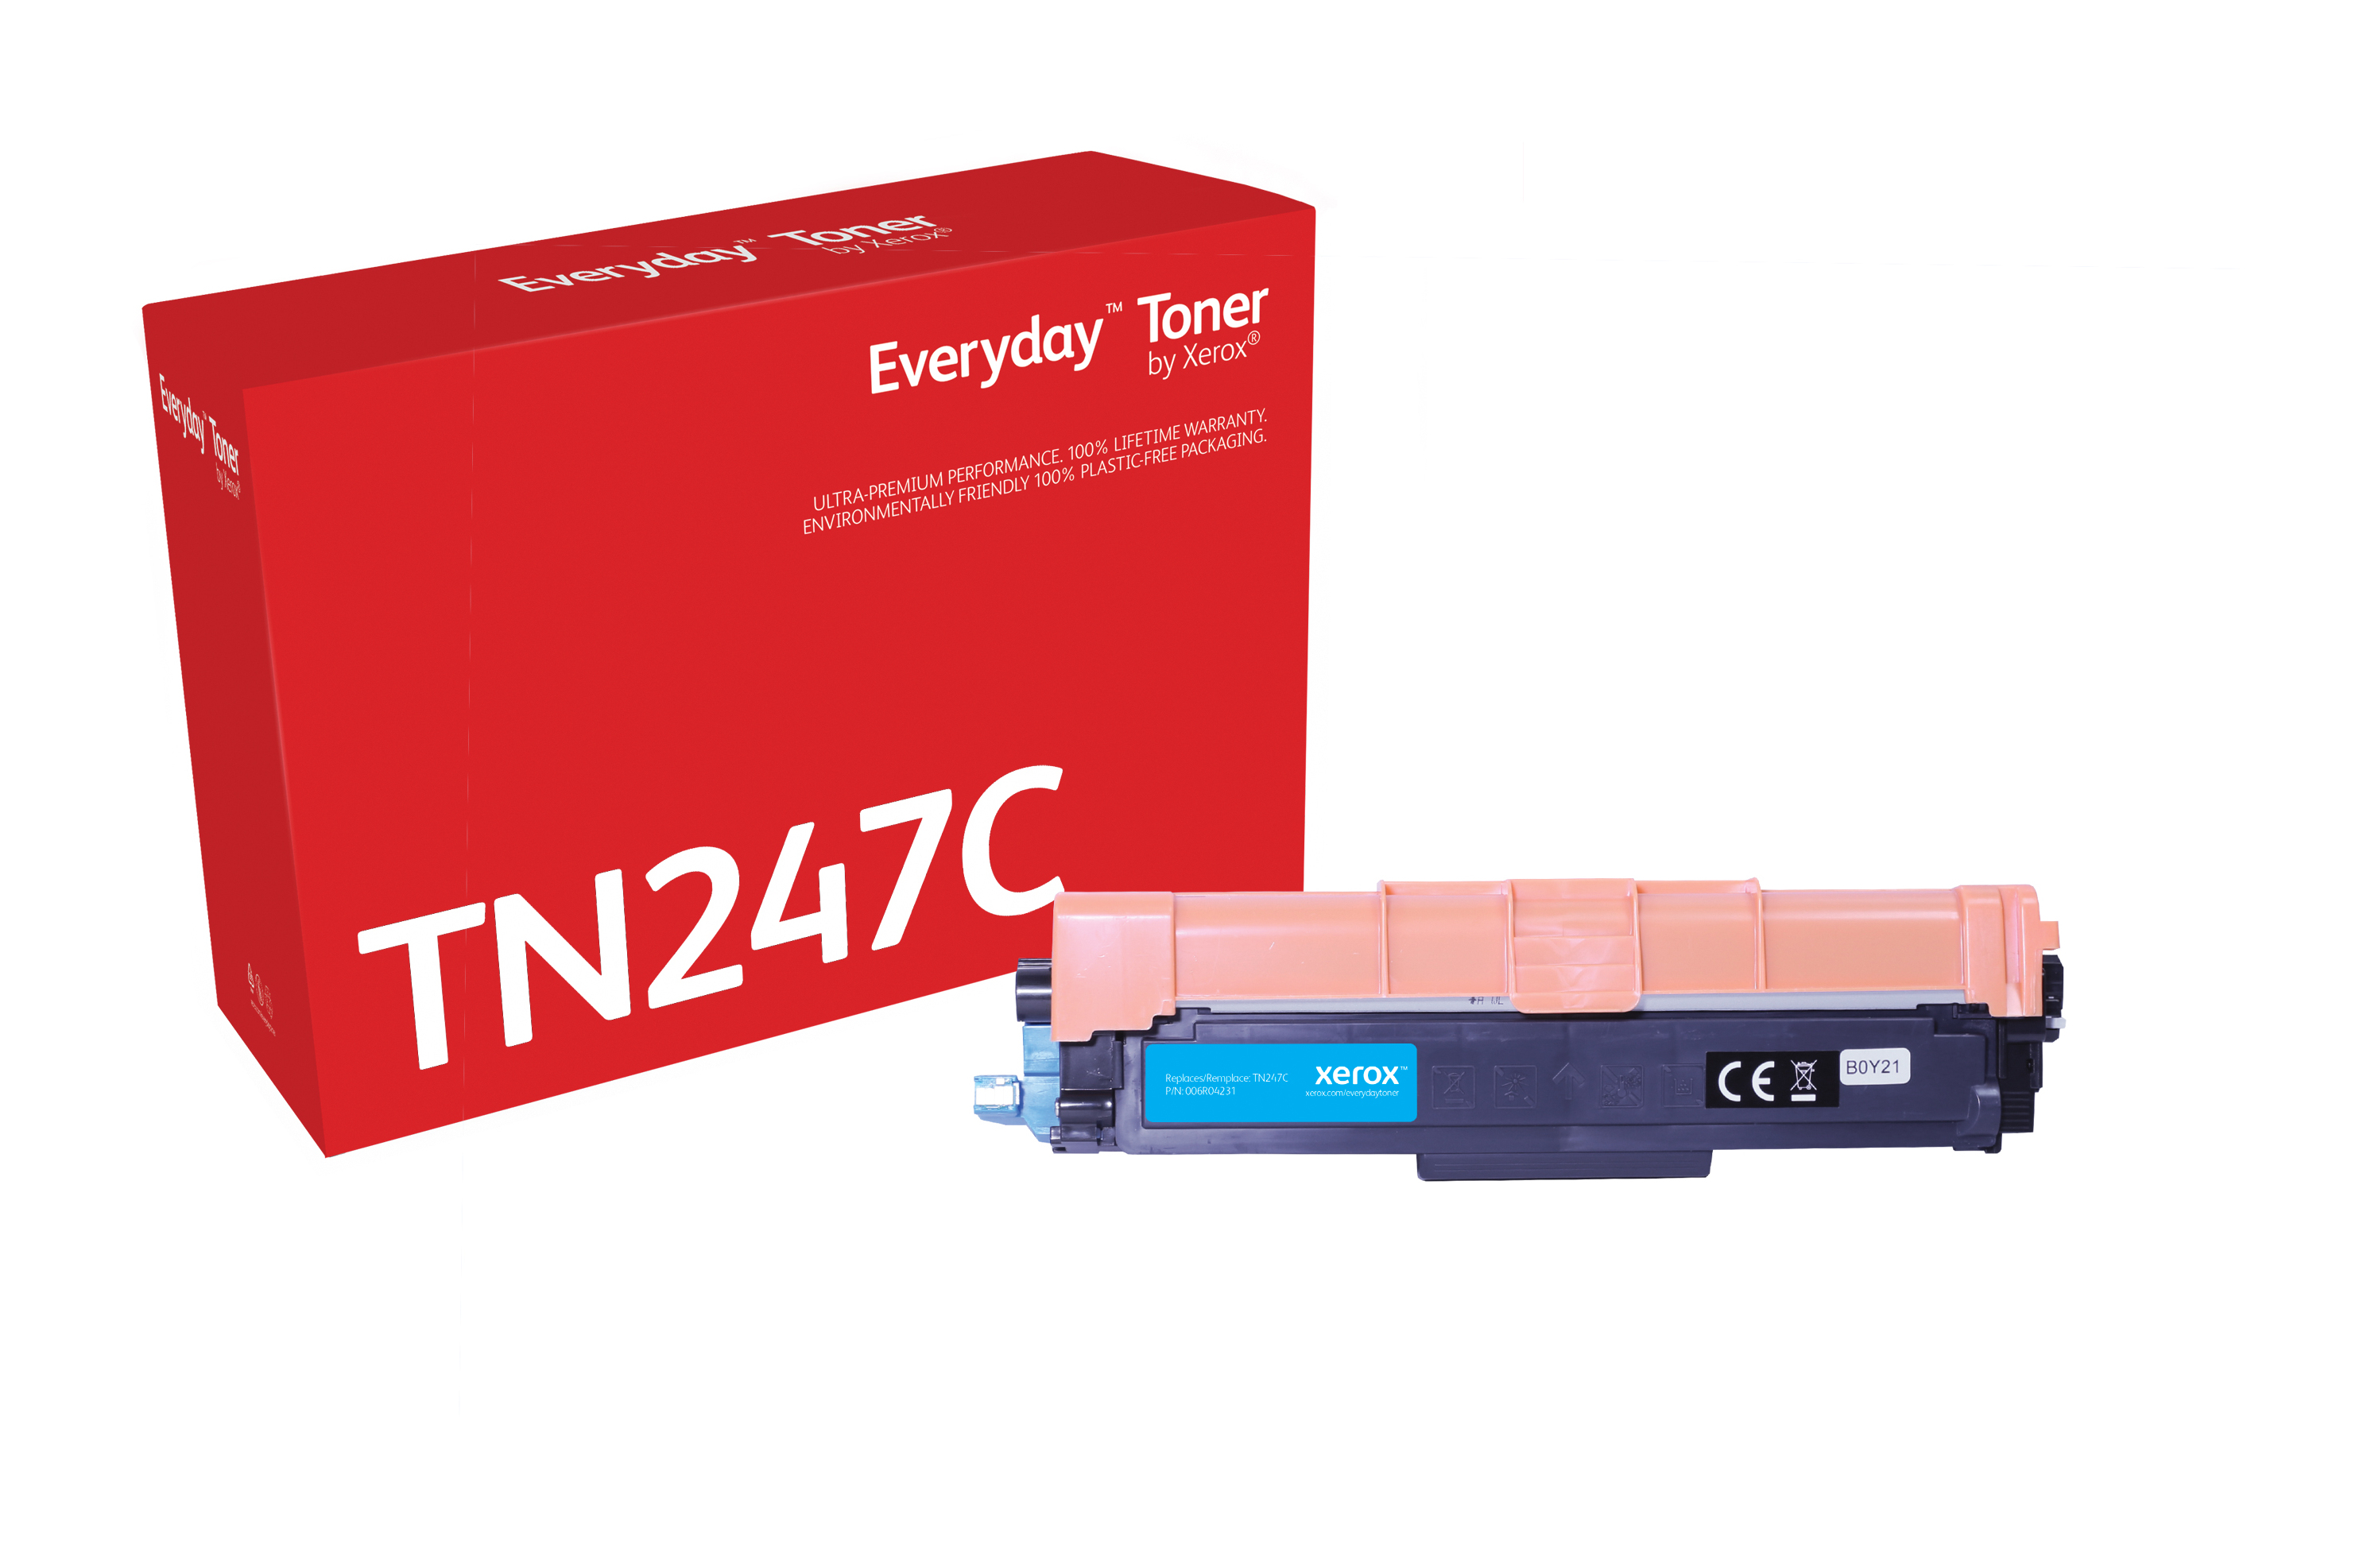 Everyday Toner Cyan compatible avec Brother TN-247C, Grande capacit